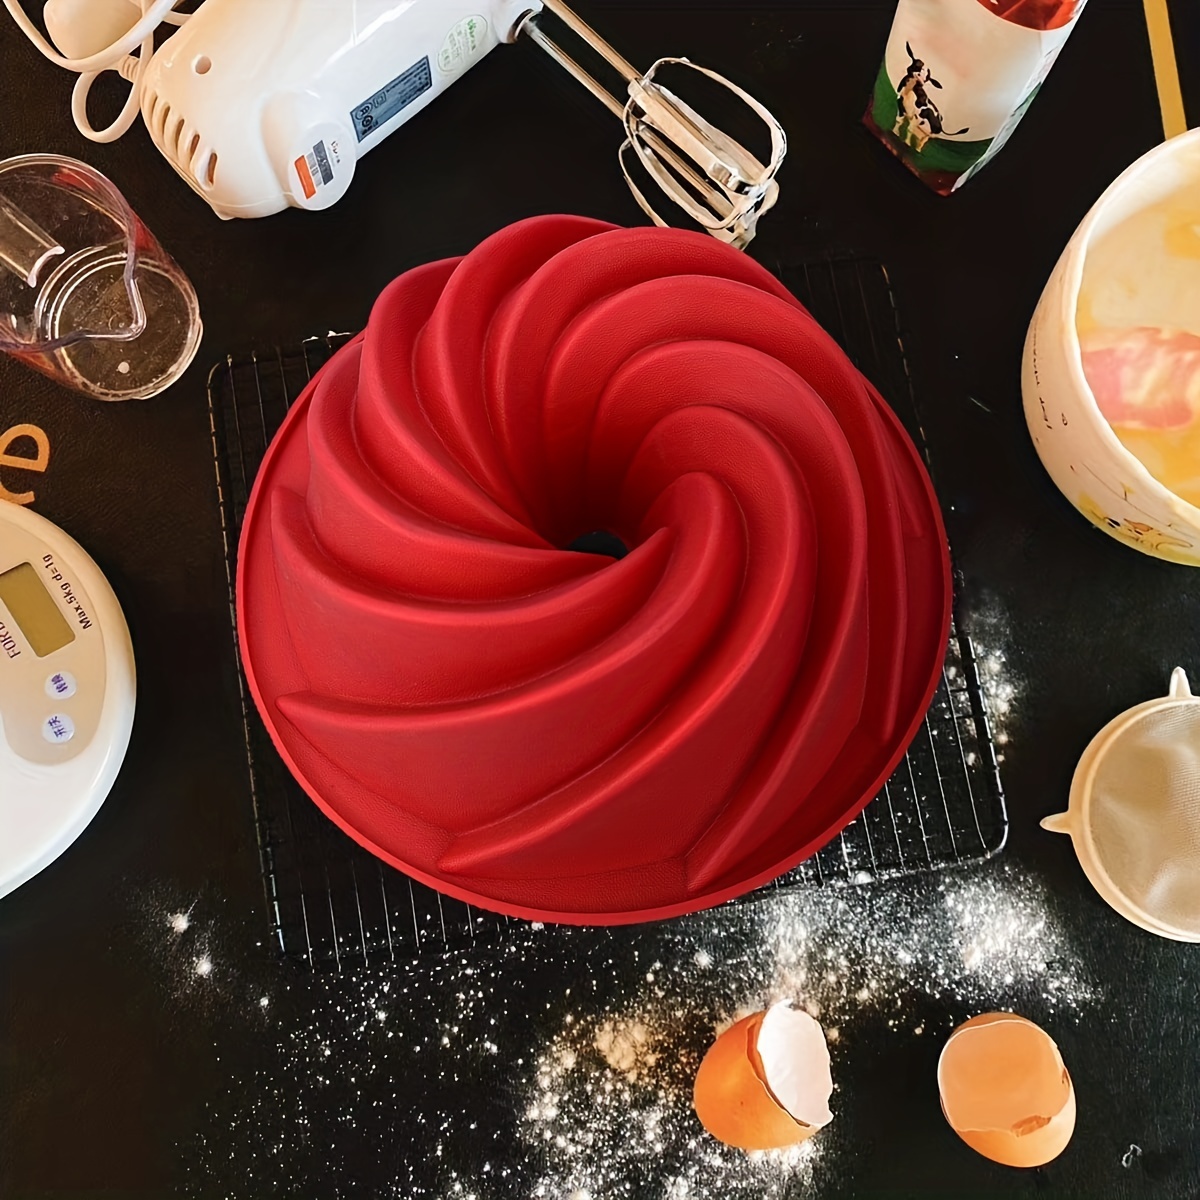 Silicone Cake Pan With Spiral Design, Food Grade Non-stick Silicone